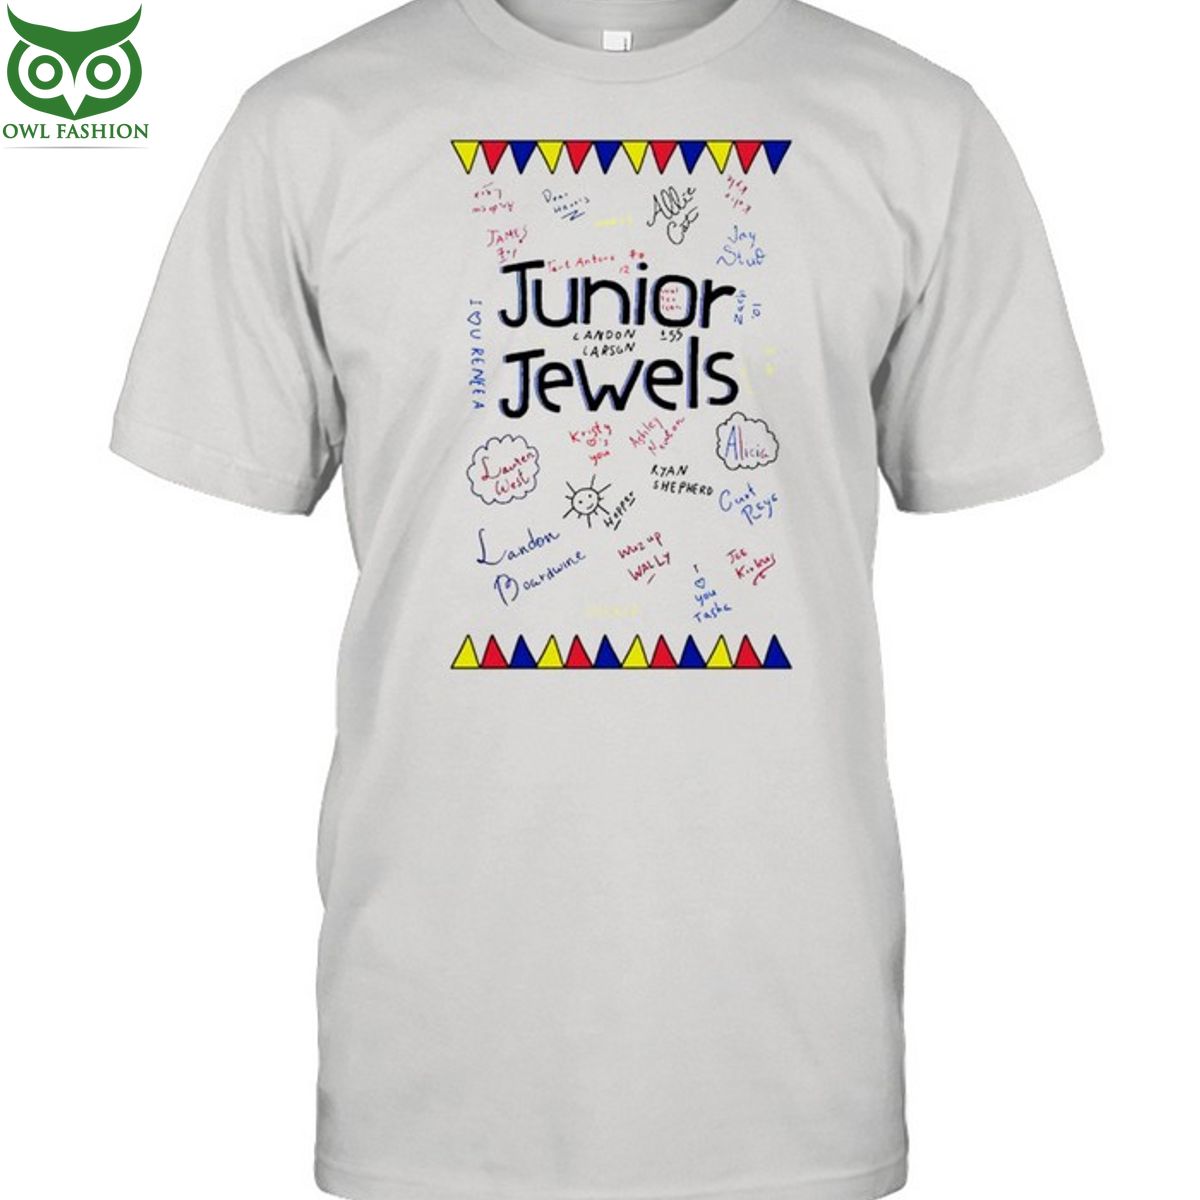 Junior jewels Taylor tshirt